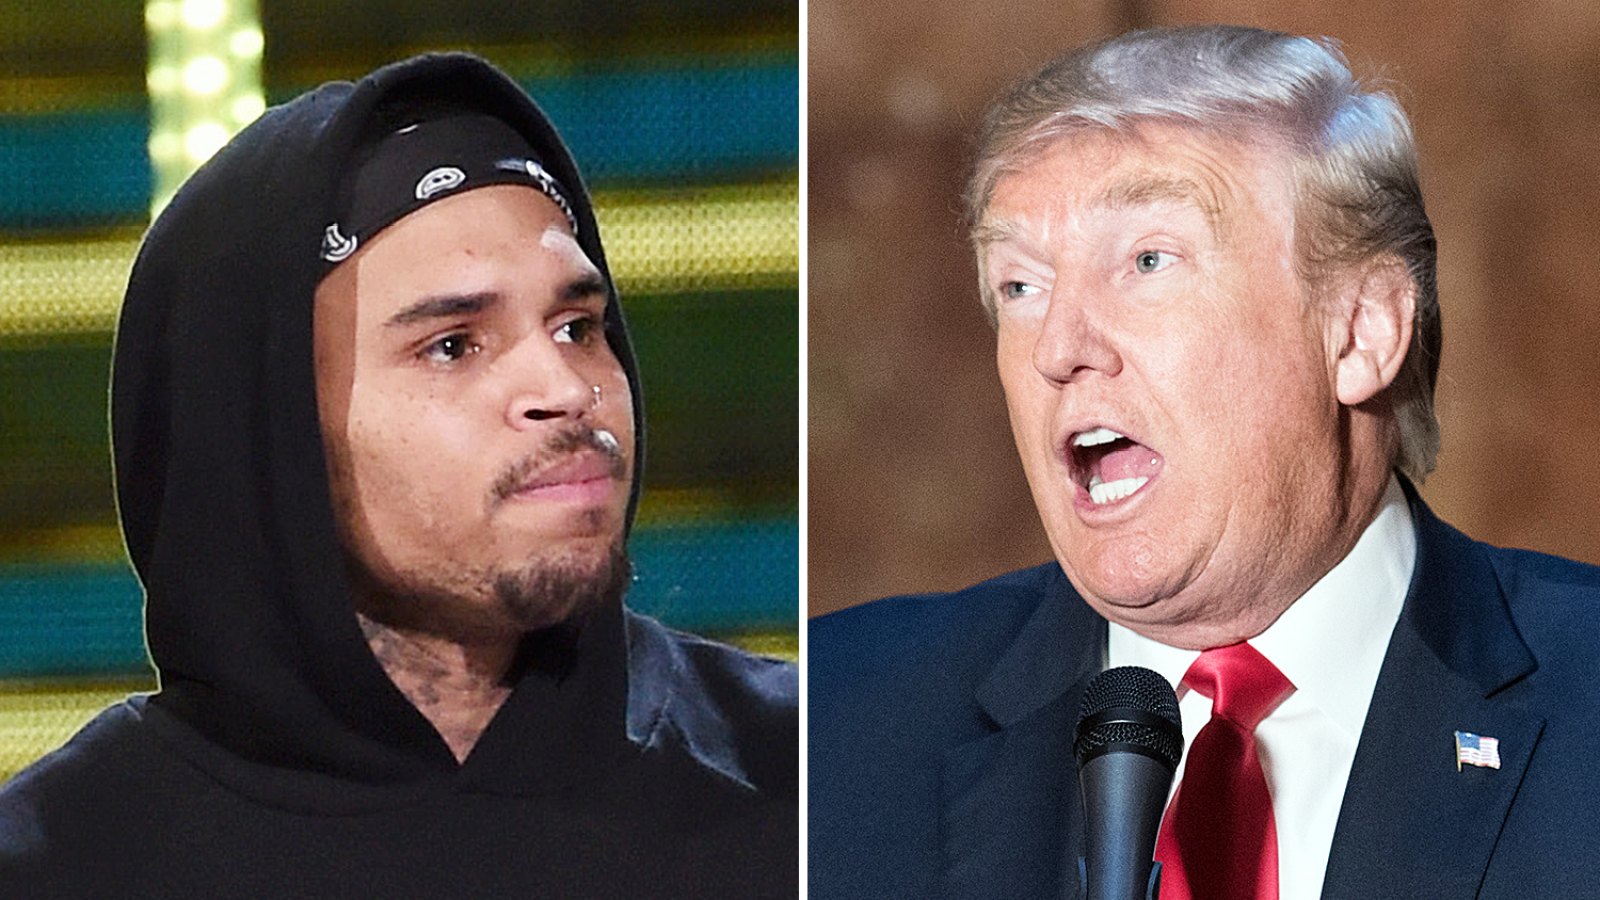 Chris Brown and Donald Trump